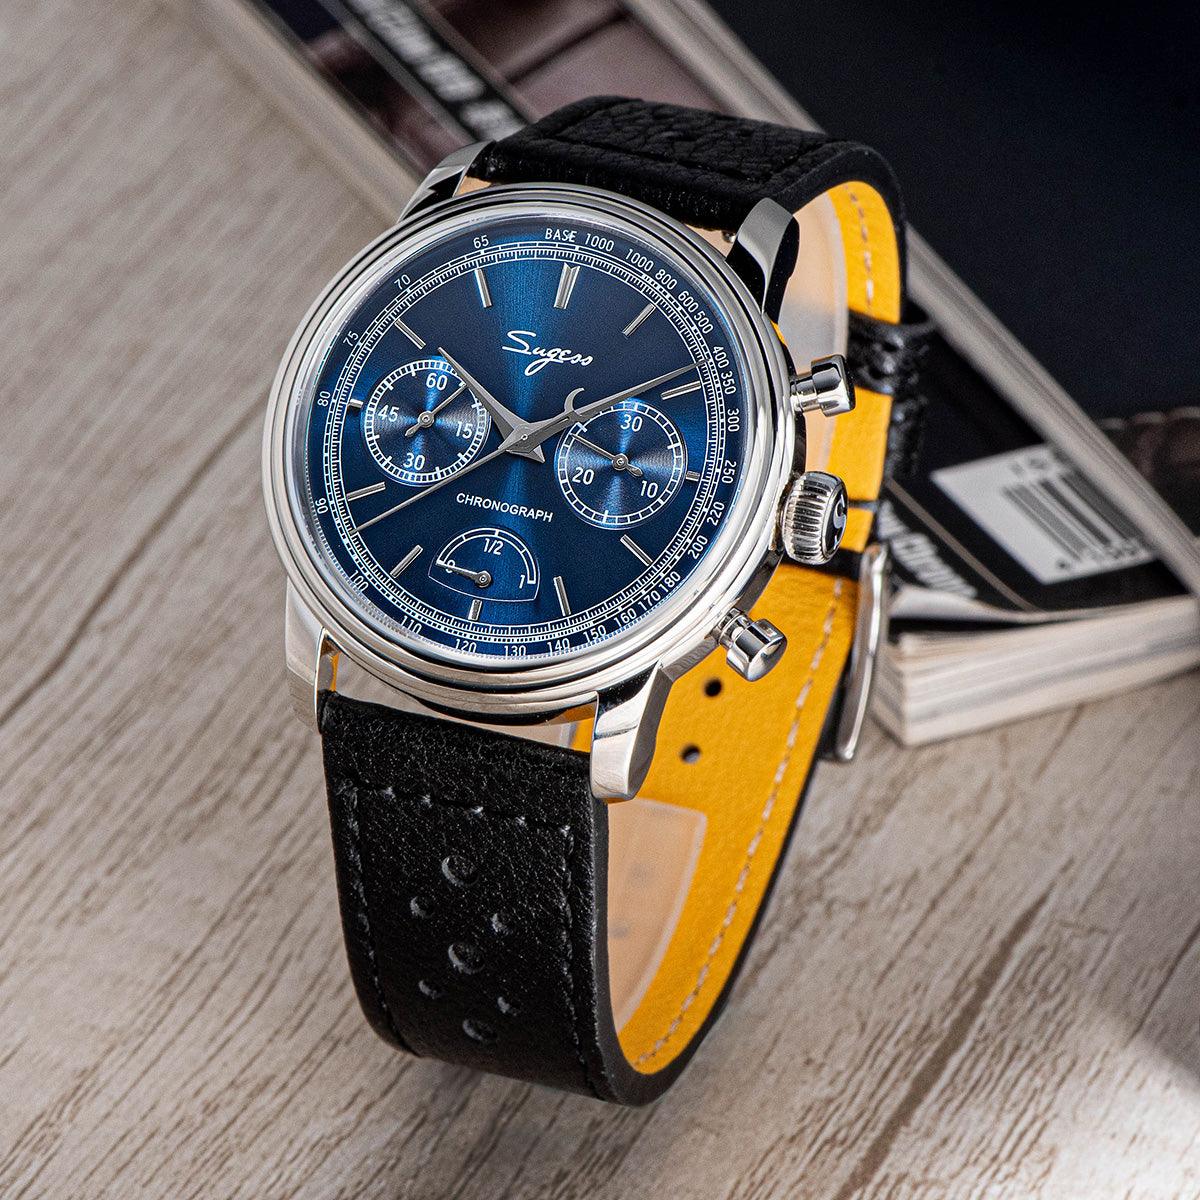 Sugess ST1906 Deep Blue Dial Multi-Function Mechanical Power Reserve Seagull Movement Men's Watch - Murphy Johnson Watches Co.